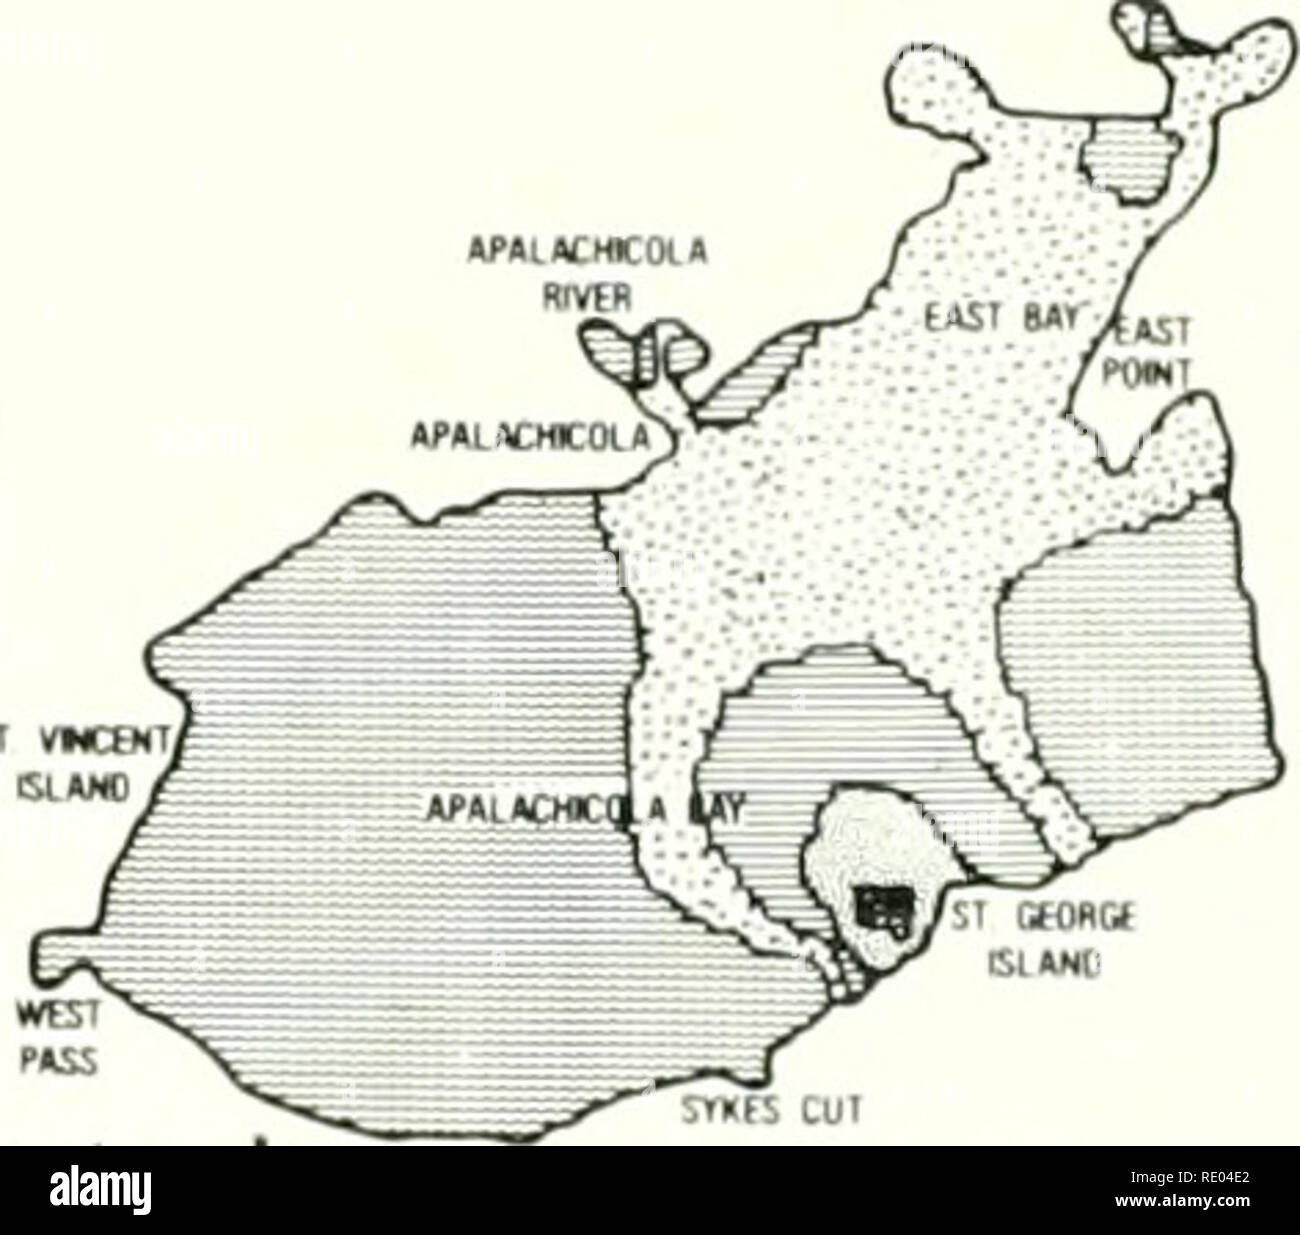 . The ecology of the Apalachicola Bay system : an estuarine profile. Estuarine ecology -- Florida Apalachicola Bay; Estuarine area conservation -- Florida. (KtobtT (UVtR / W! X'/uf lii *Â« / 1 ^ Februar&gt; -^-&gt;I!?U fc:.! aoftK *pÂ«iÂ«DÂ«:oiÂ« &gt;^ Â«..,Â«Â«oi&gt;^ ^3, -,T vÂ»Â«&gt;.r7V^ f7 IXM cnw/ x.,^J^ ^^^ WR'^^S^ y&quot; fÂ«Â£S &gt;. ^ - . ^-^'^r, April r^ 'W Â»p (LACHCOl* // &quot;x/* RIVEH J AOINT APWAtMKOlAy ^  Y^ rtS- r ^^ SI VWCJN^v   r  ^HCw^awV Â«sr^^^ A ^' March -^^ ^-wscu, Â»P*lÂ»CMtOLÂ« RlVtH [ EÂ»ST 8Ar/^5, 4PÂ»l Â»CmCI)L?&gt; J VJ^ 5T rtctm/- ' /V^ &quot; Q sl*Â«l Stock Photo